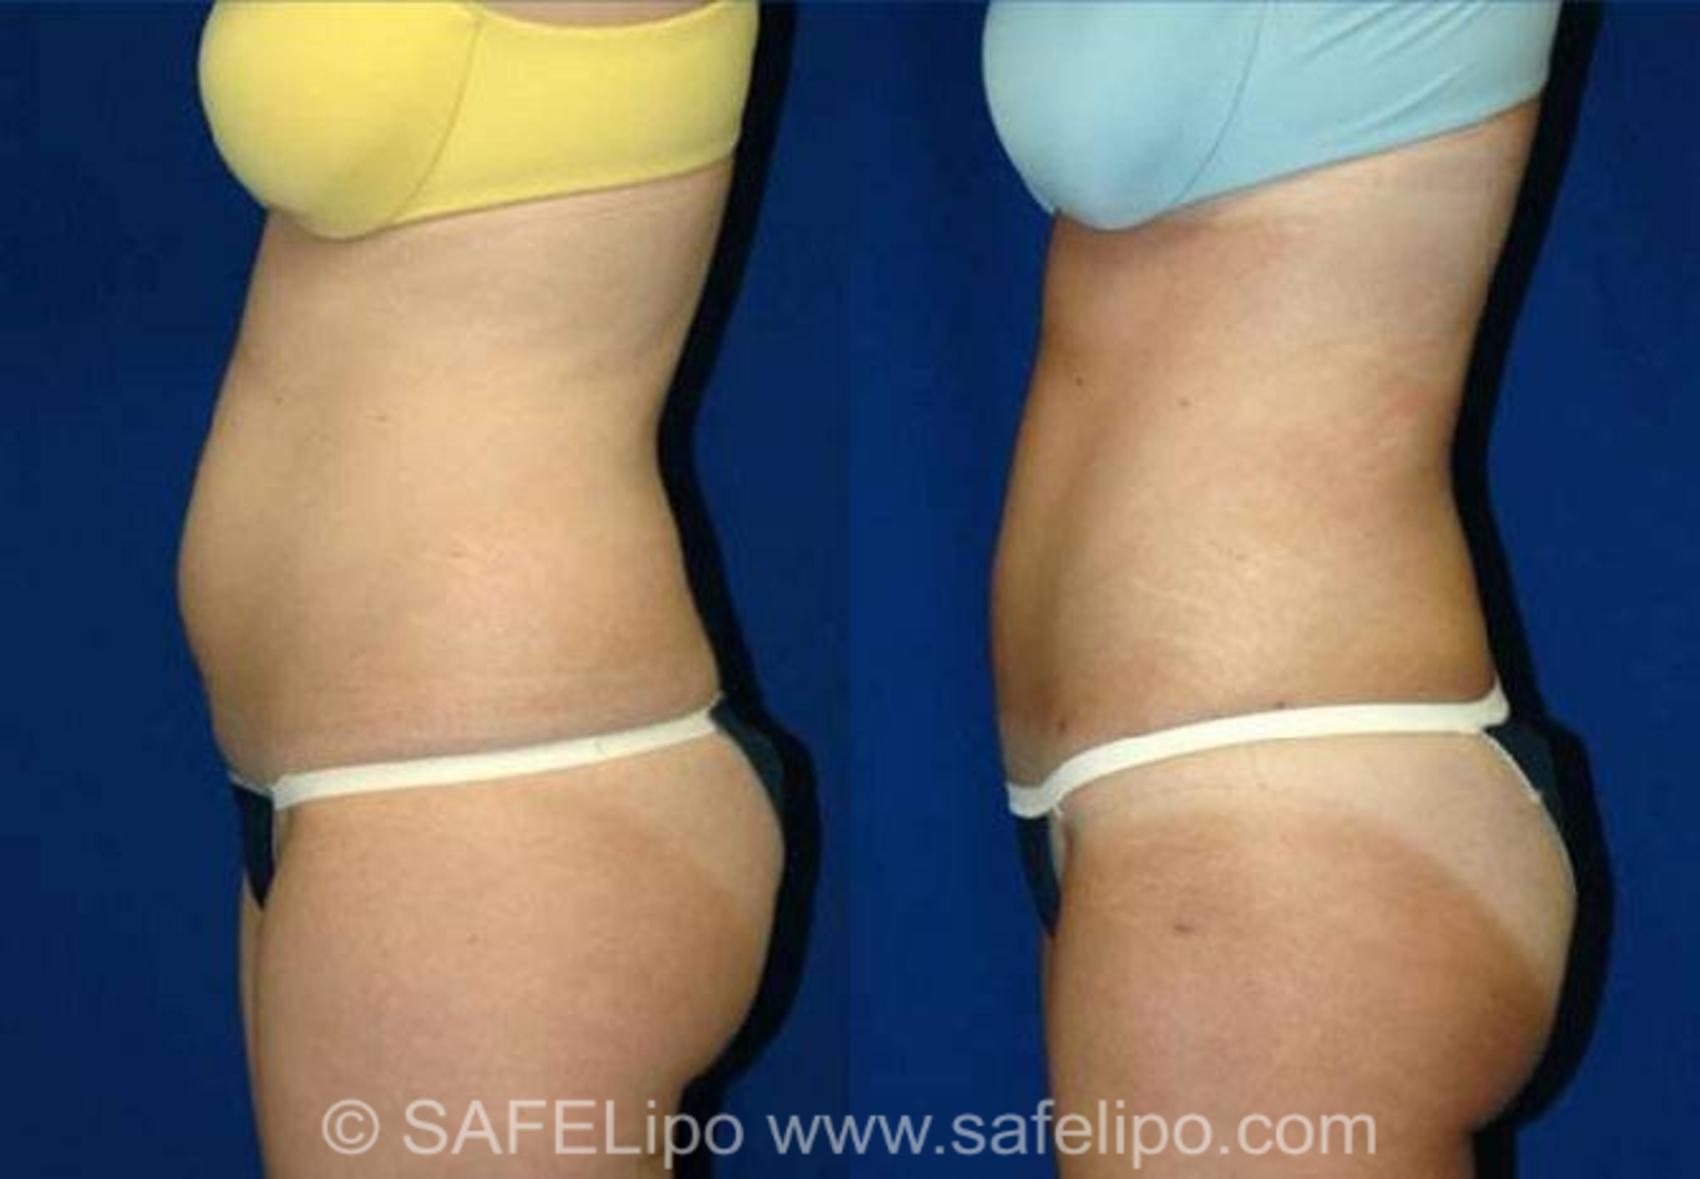 SAFELipoHD® Case 141 Before & After View #3 | SAFELipo®